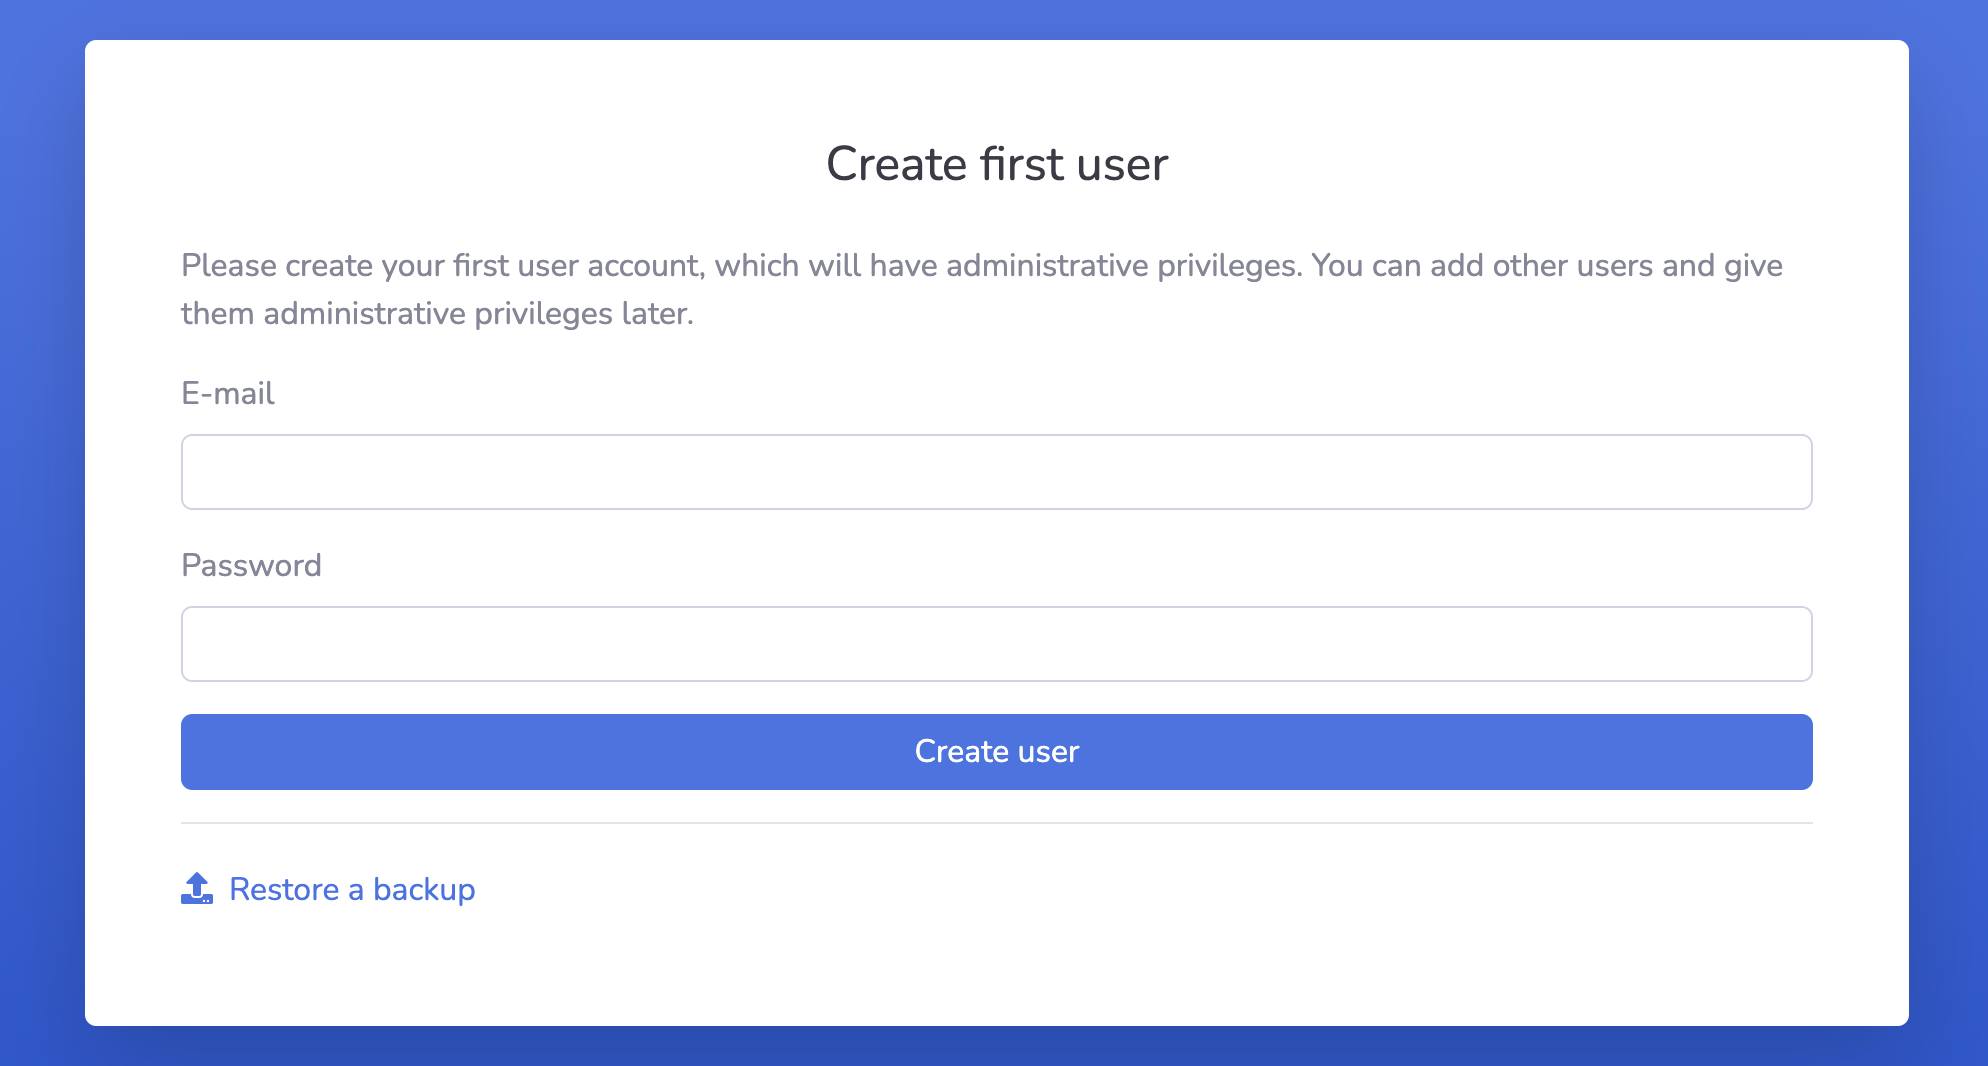 The Saltcorn create user page